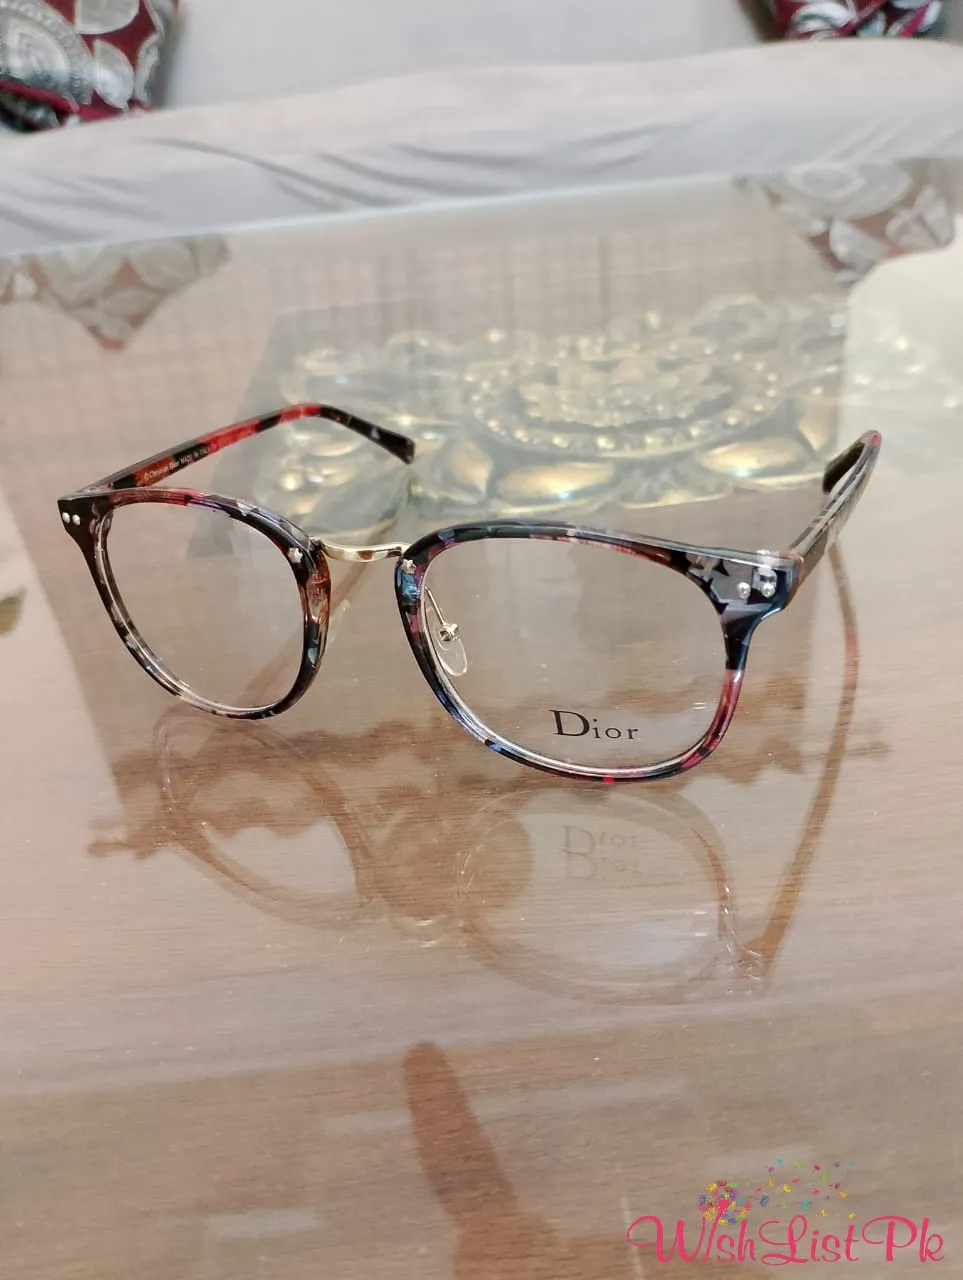 Best Price Dior Spectacles